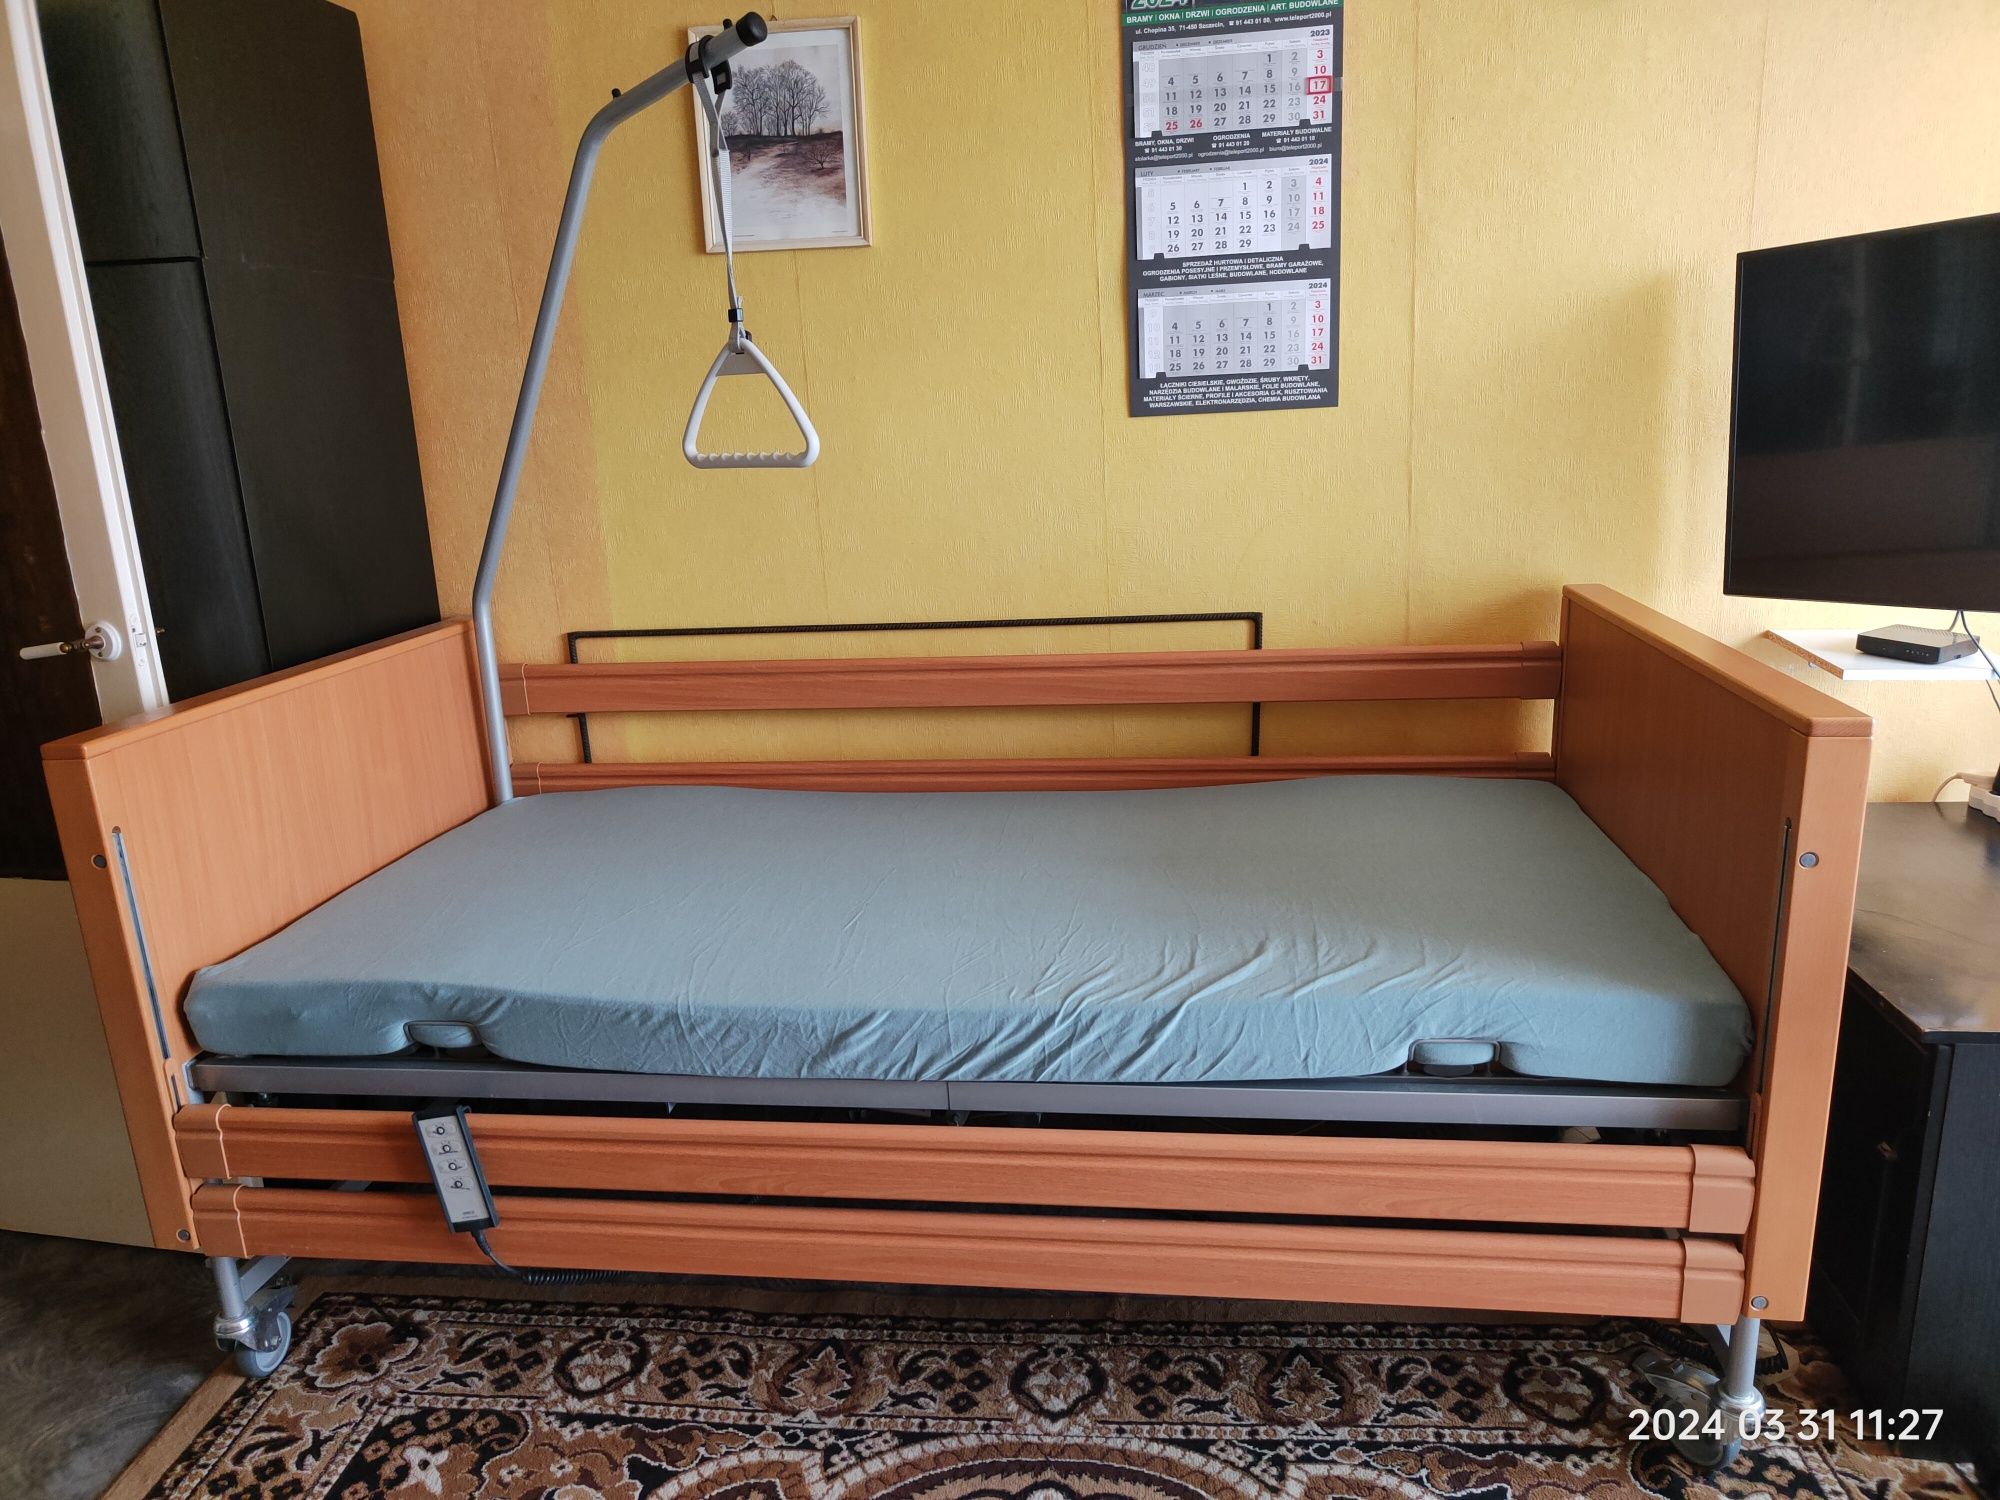 Łóżko rehabilitacyjne ELBUR PB331 L - Używane